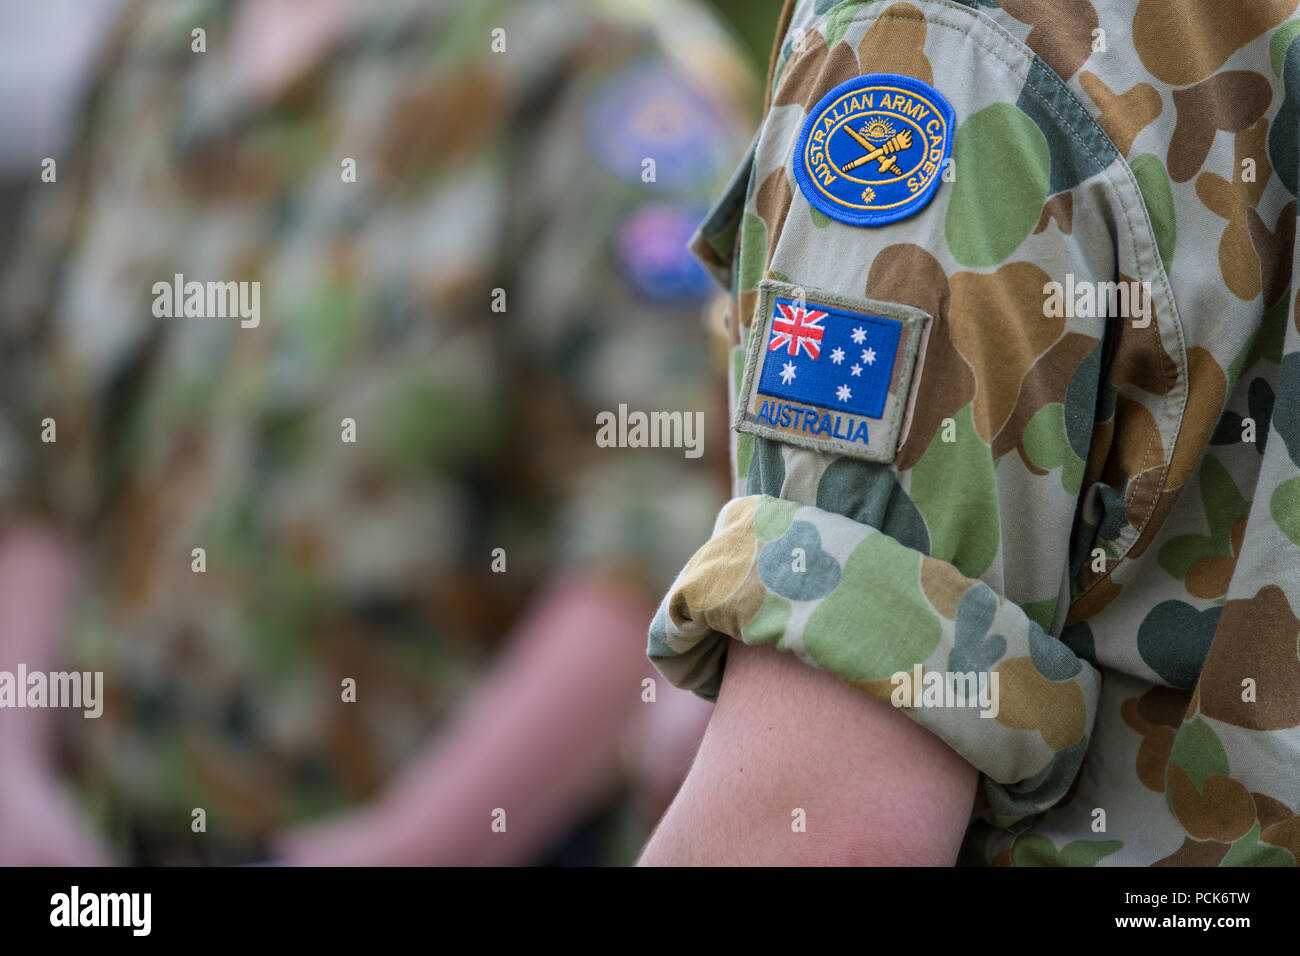 Australian Army Cadets uniform Stock Photo - Alamy